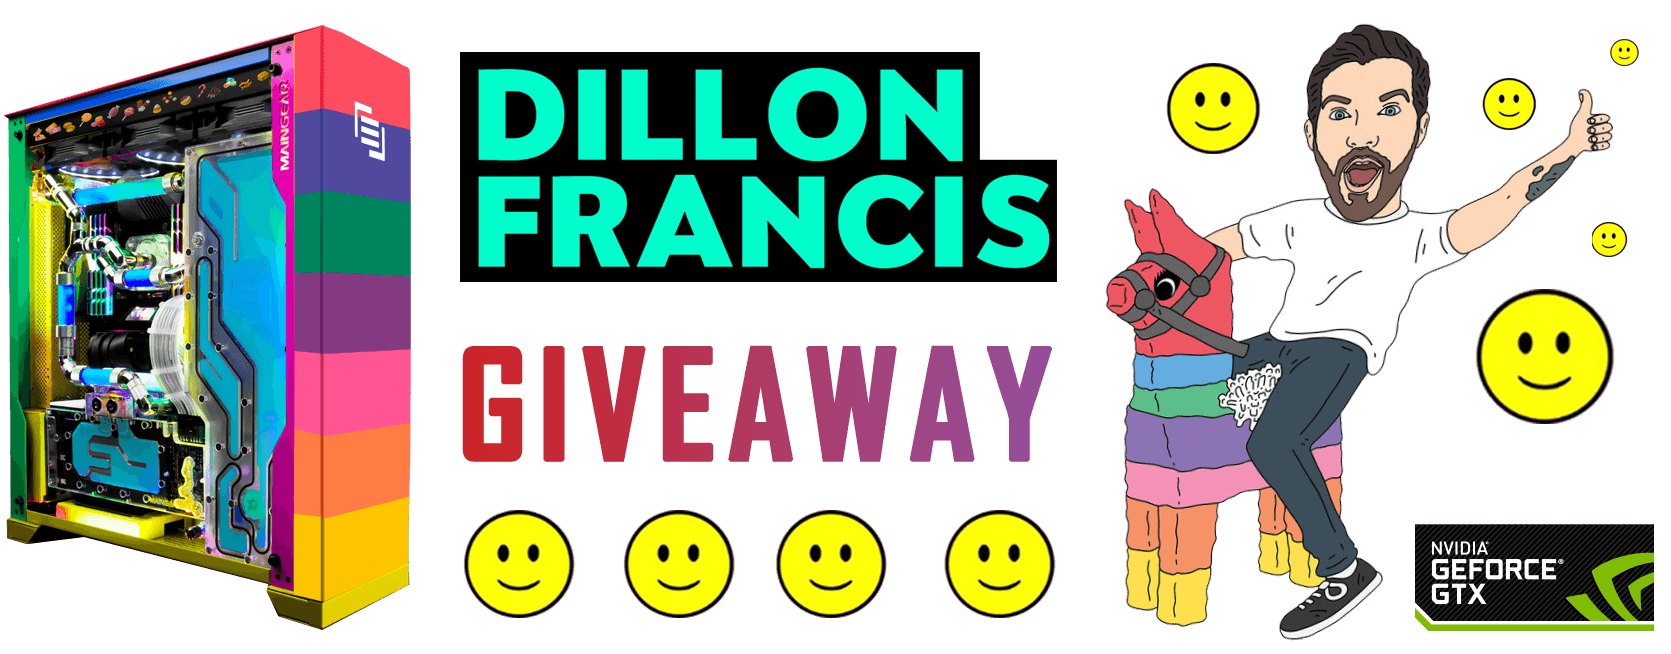 Dillion Francis Logo - MAINGEAR PC. DILLON FRANCIS GIVEAWAY